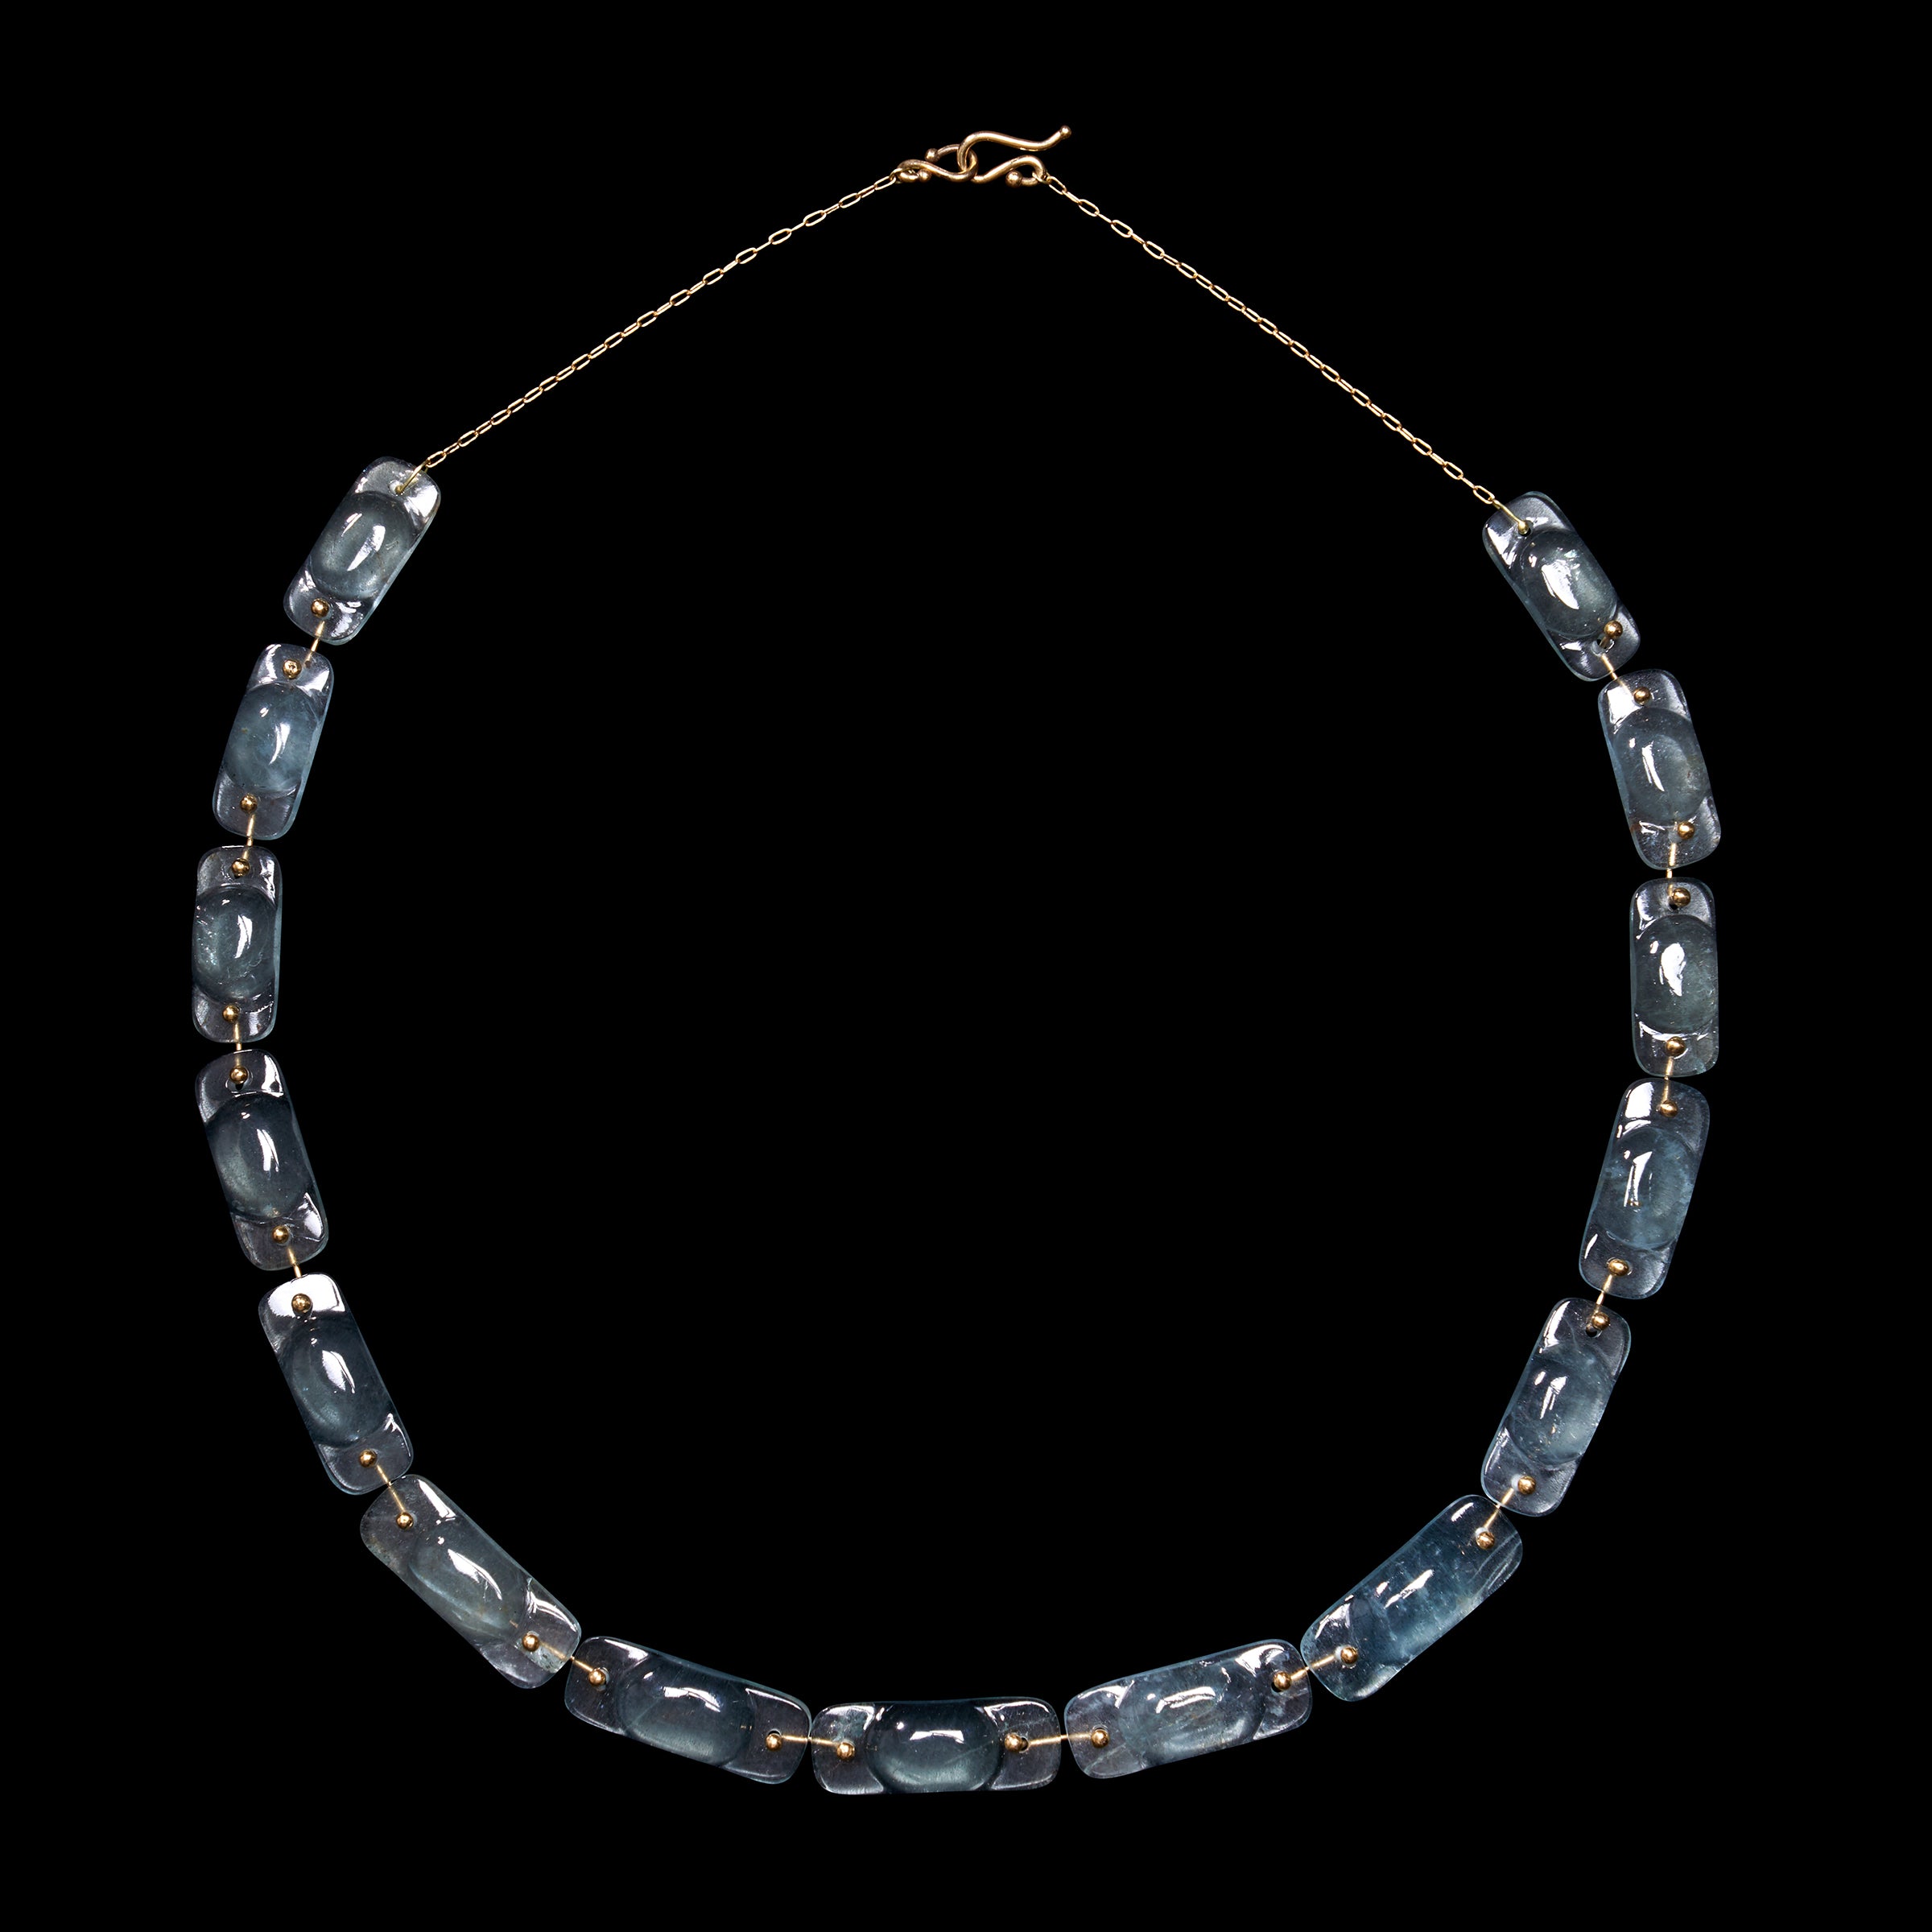 Hand Cut Stone Tiles Necklace